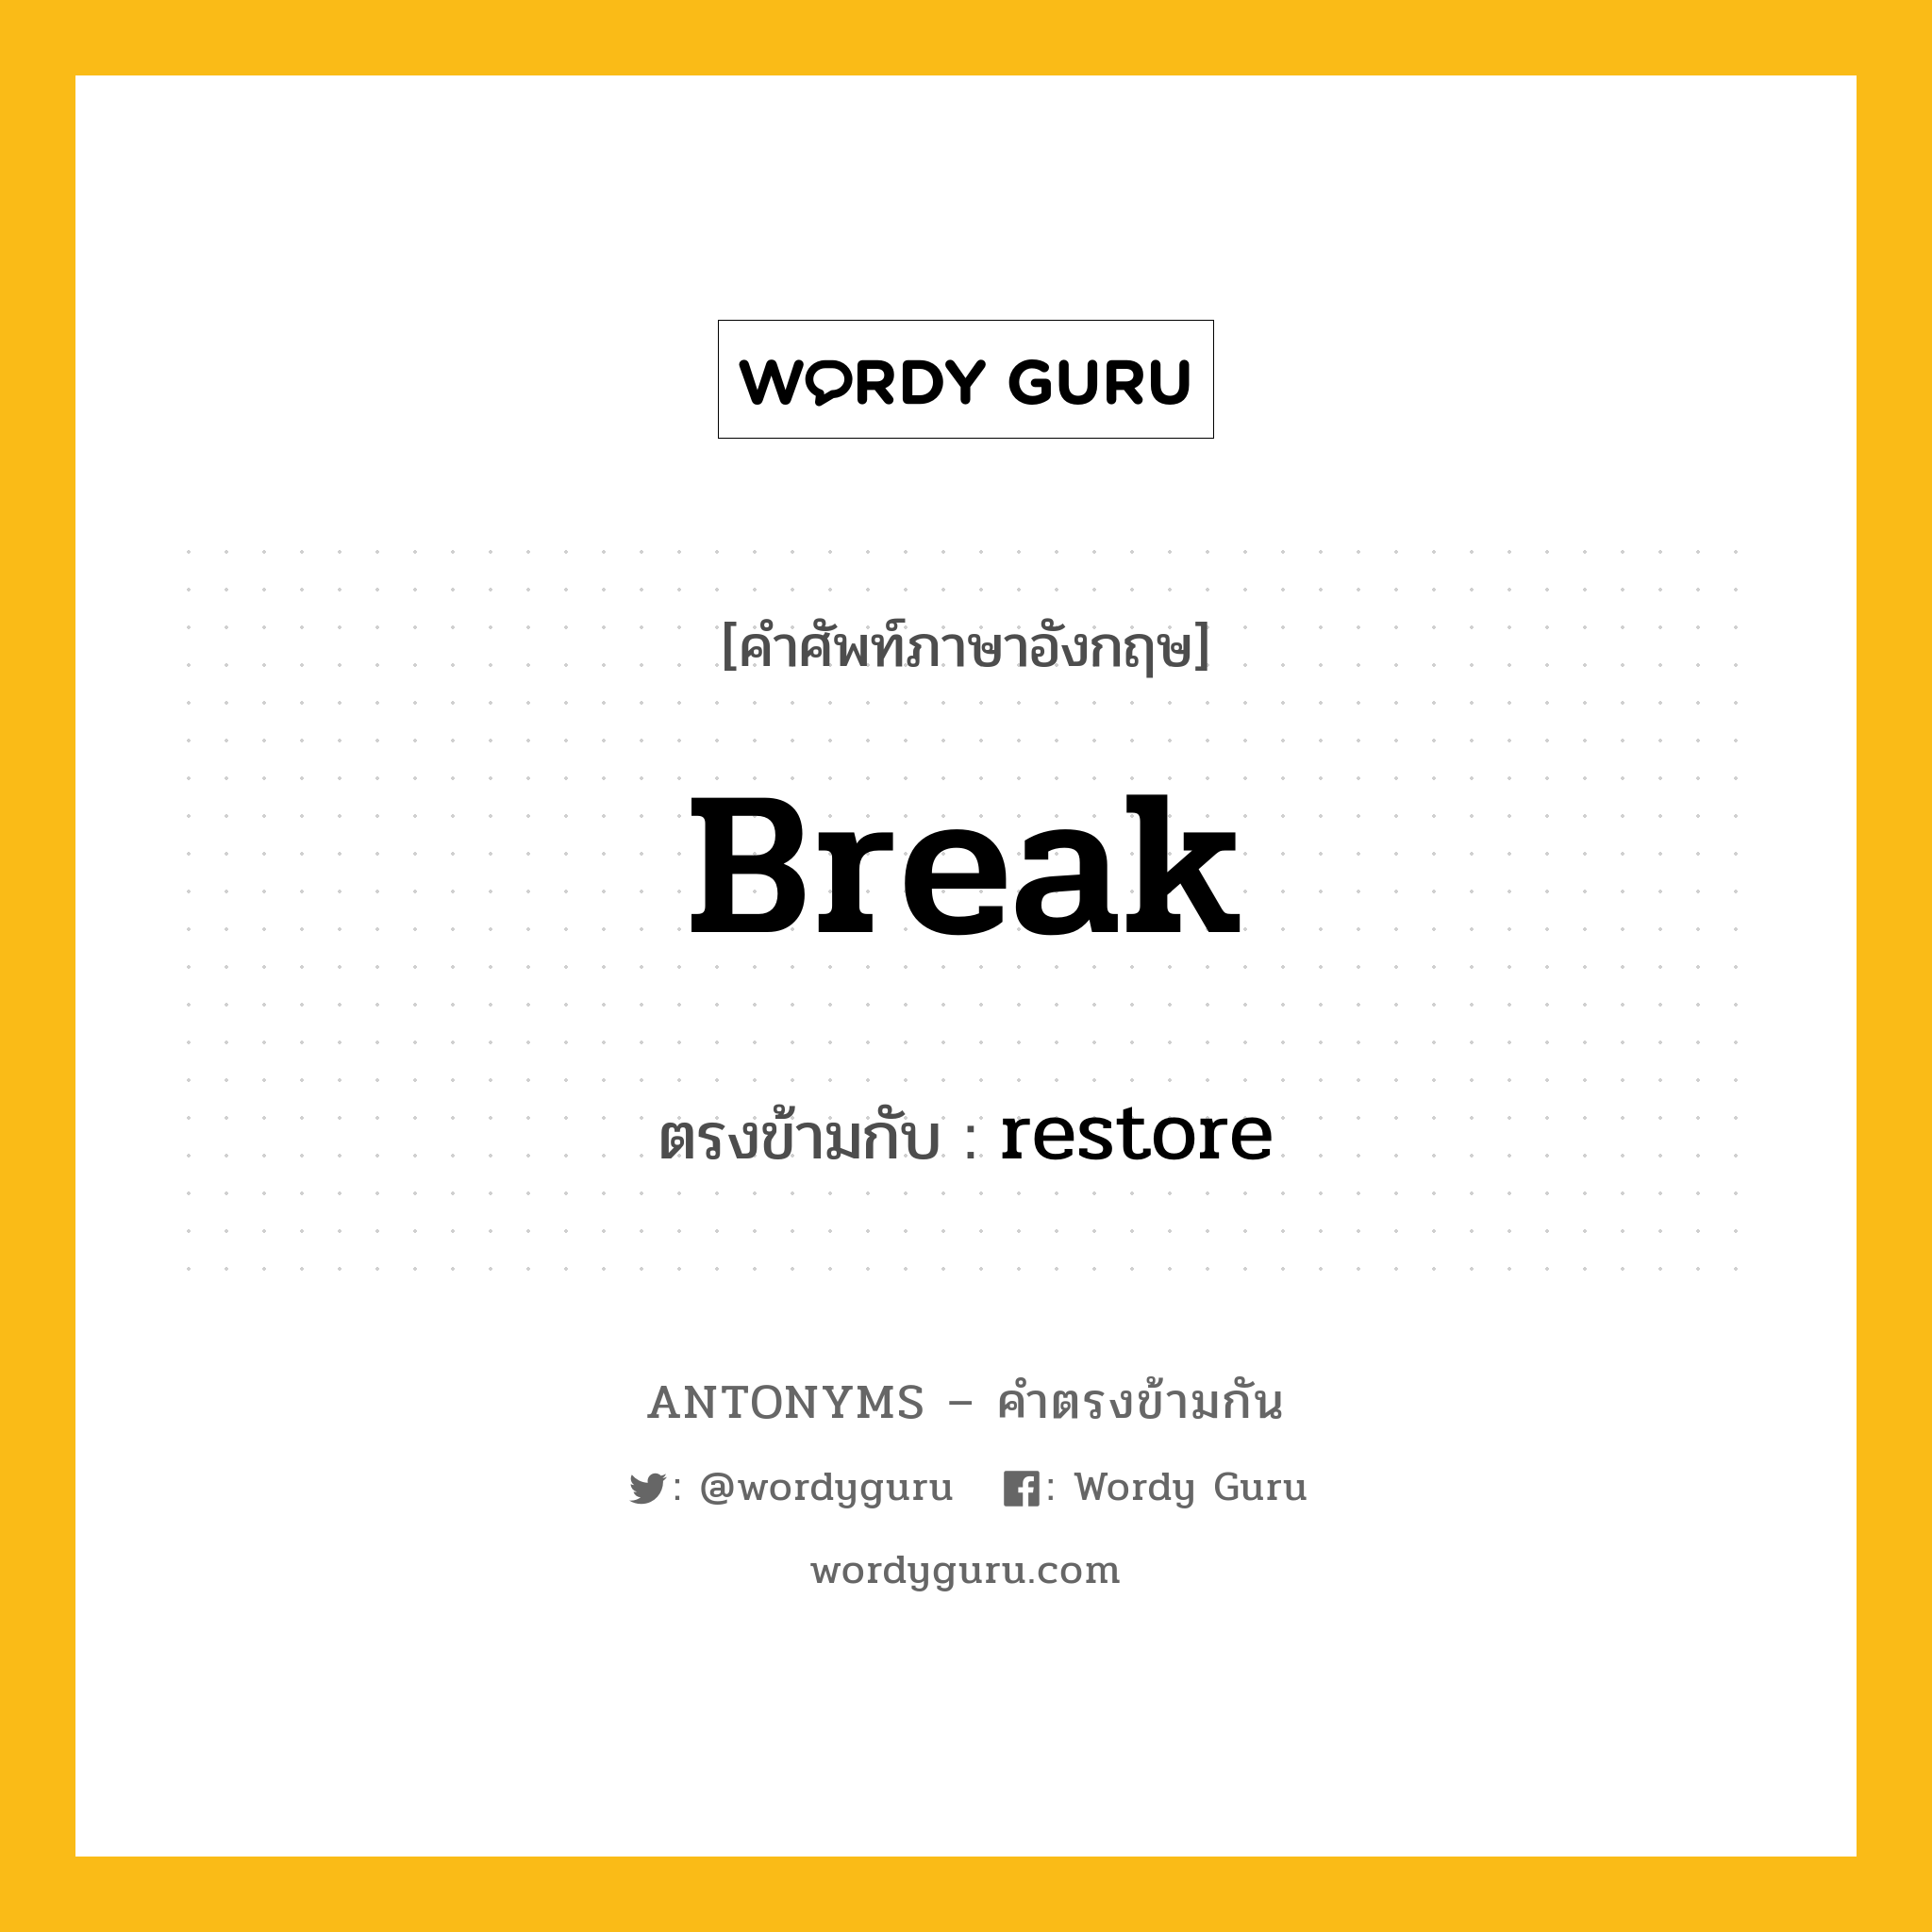 break เป็นคำตรงข้ามกับคำไหนบ้าง?, คำศัพท์ภาษาอังกฤษ break ตรงข้ามกับ restore หมวด restore